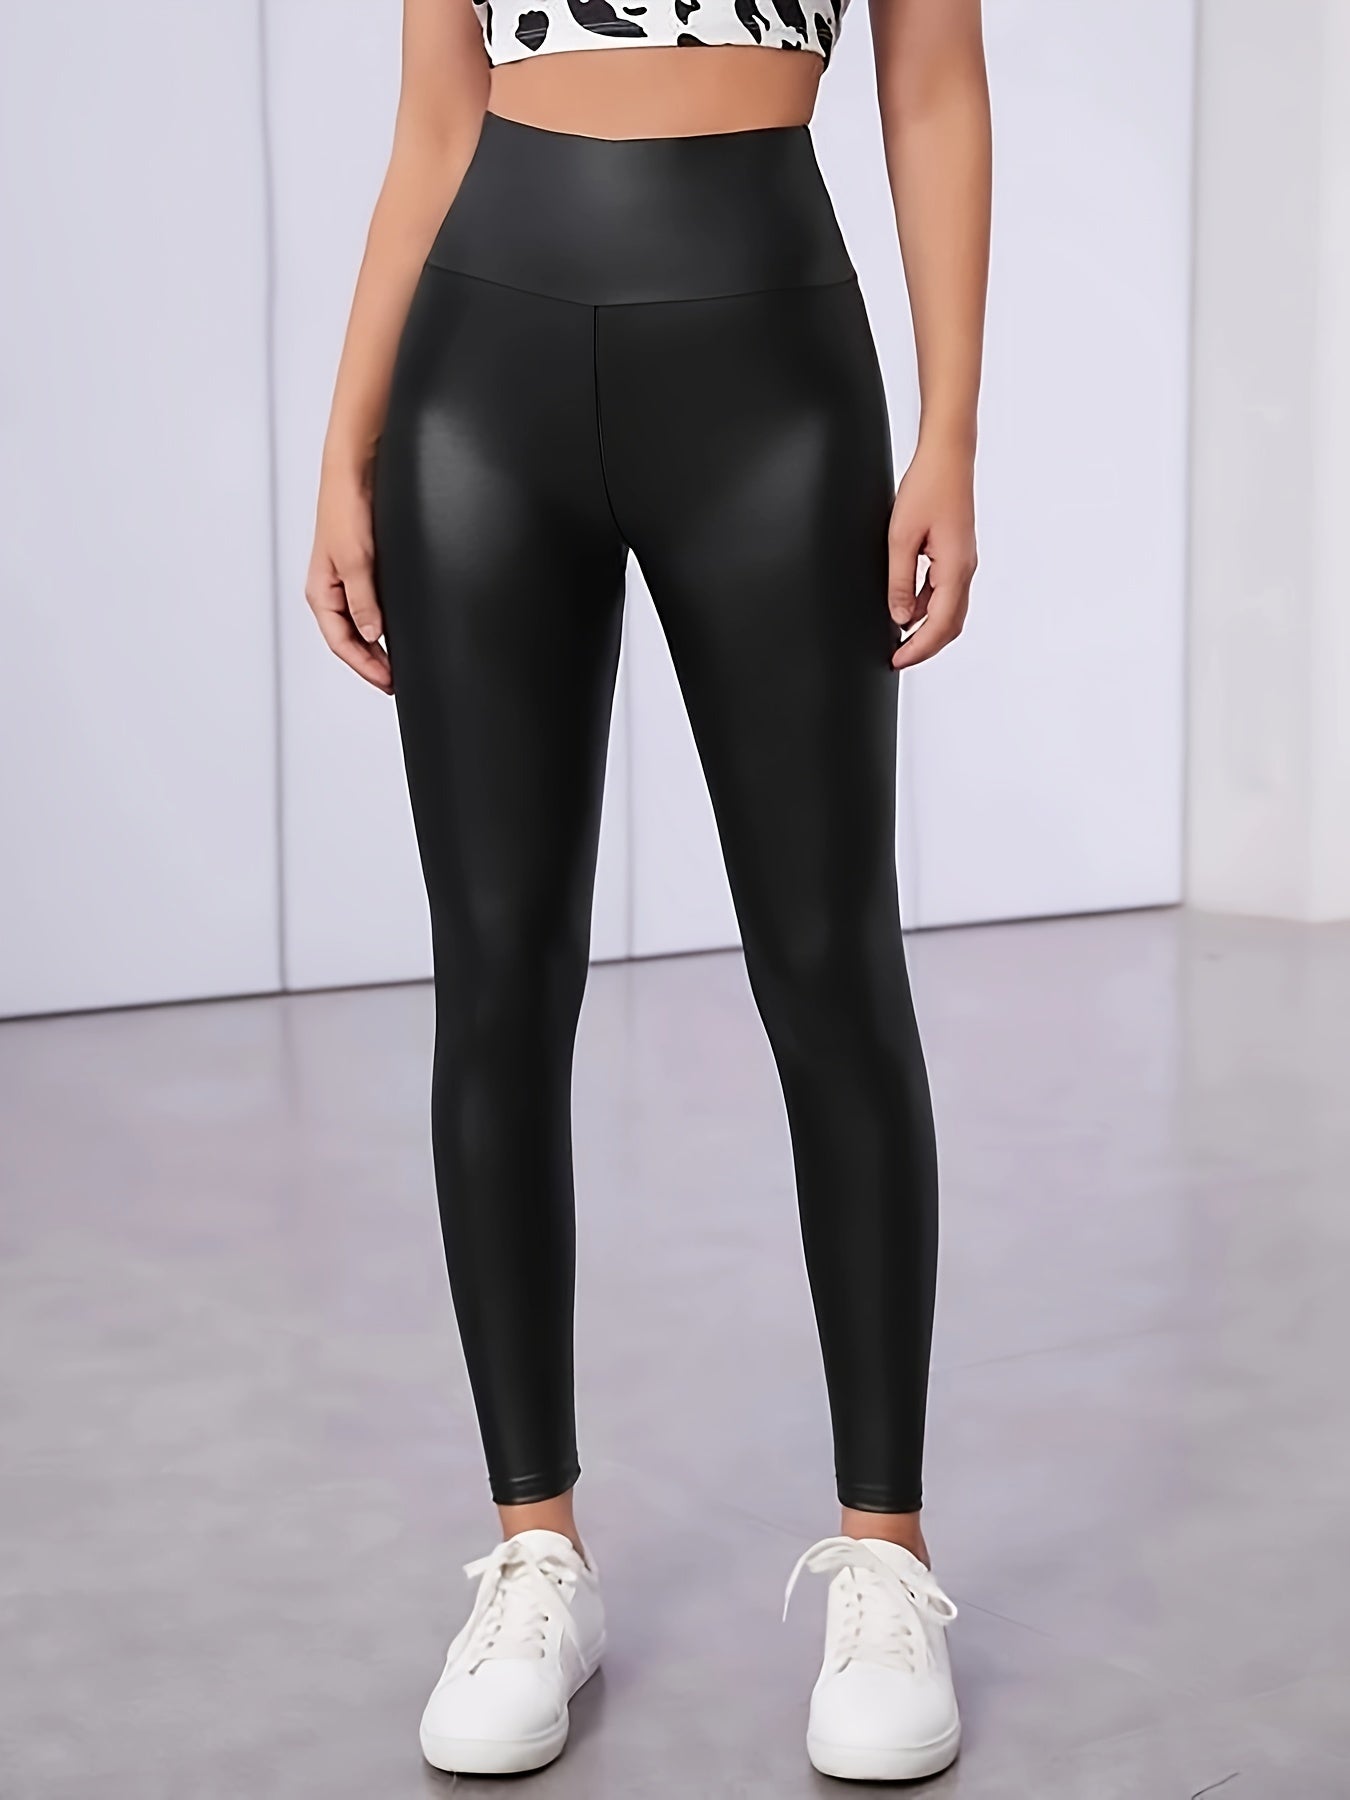 Faux Leather High Waist Fleece Sports Leggings, Fashionable Sexy Running Yoga Skinny Pants, Women's Activewear